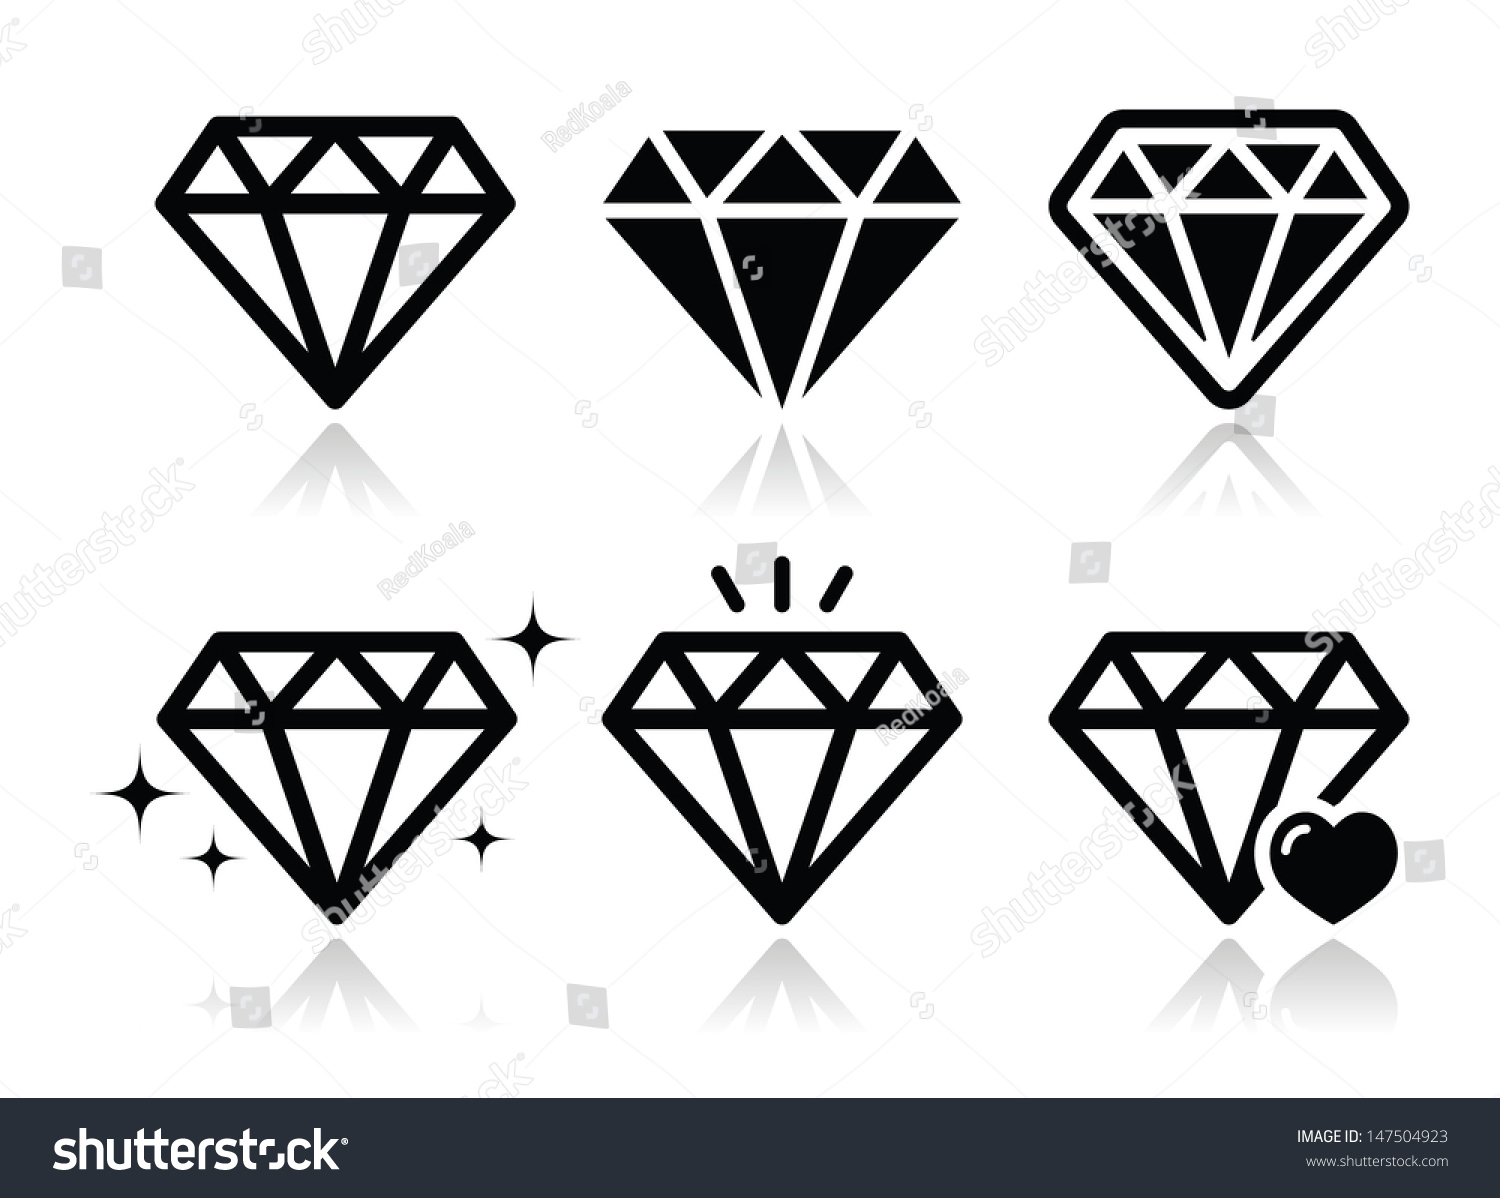 diamond clip art vector - photo #46